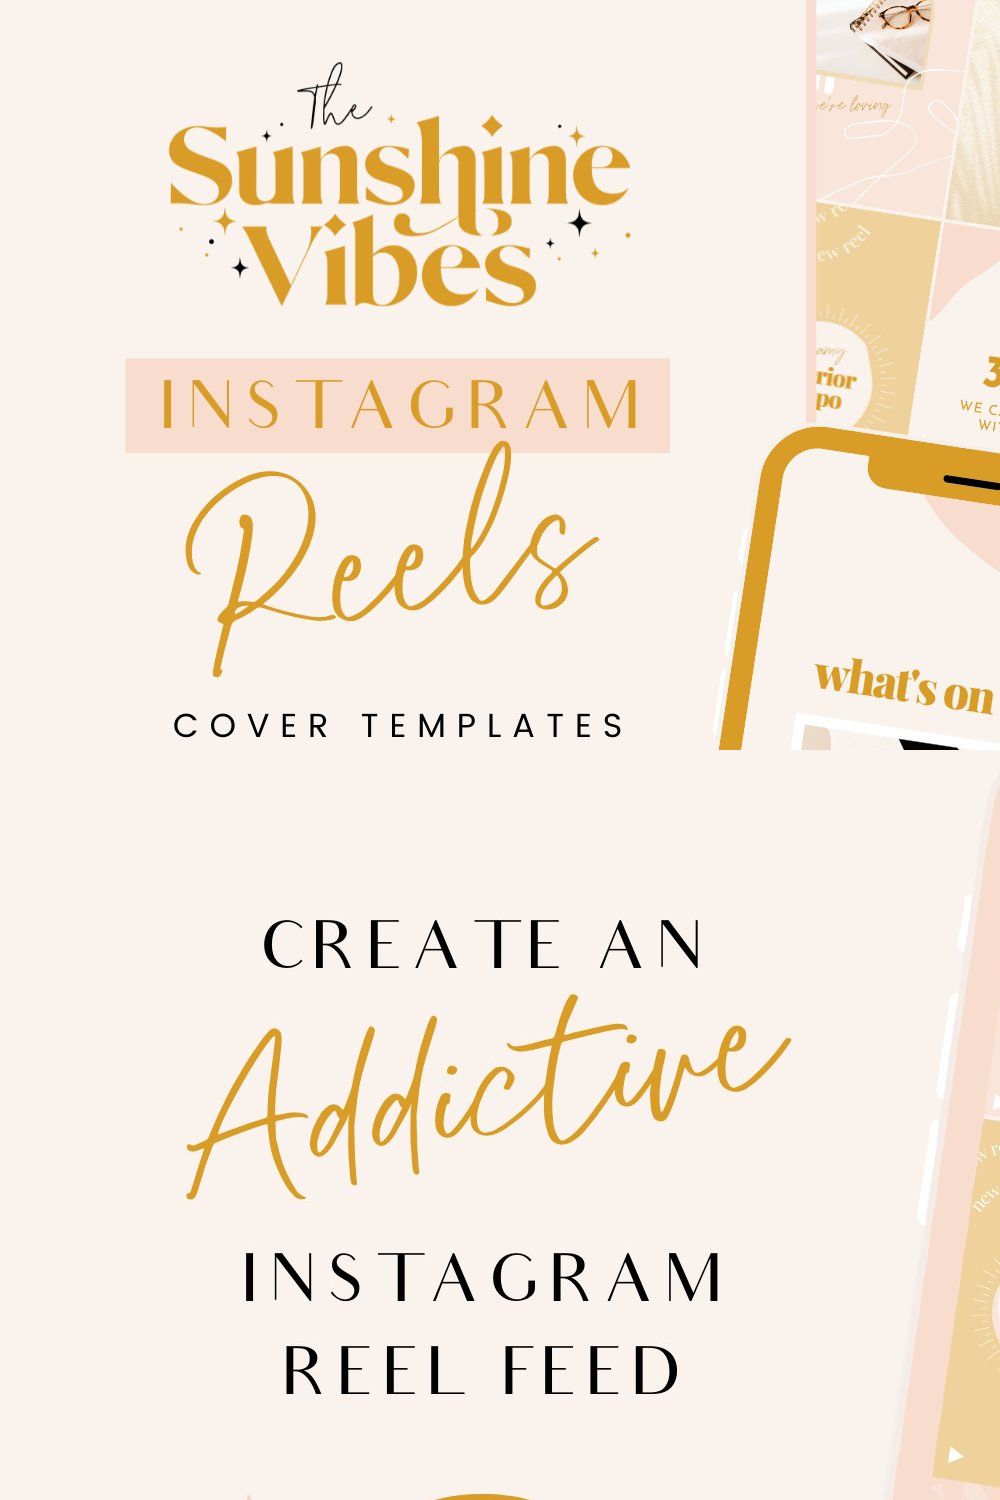 Instagram Reels - Sunshine Vibes pinterest preview image.